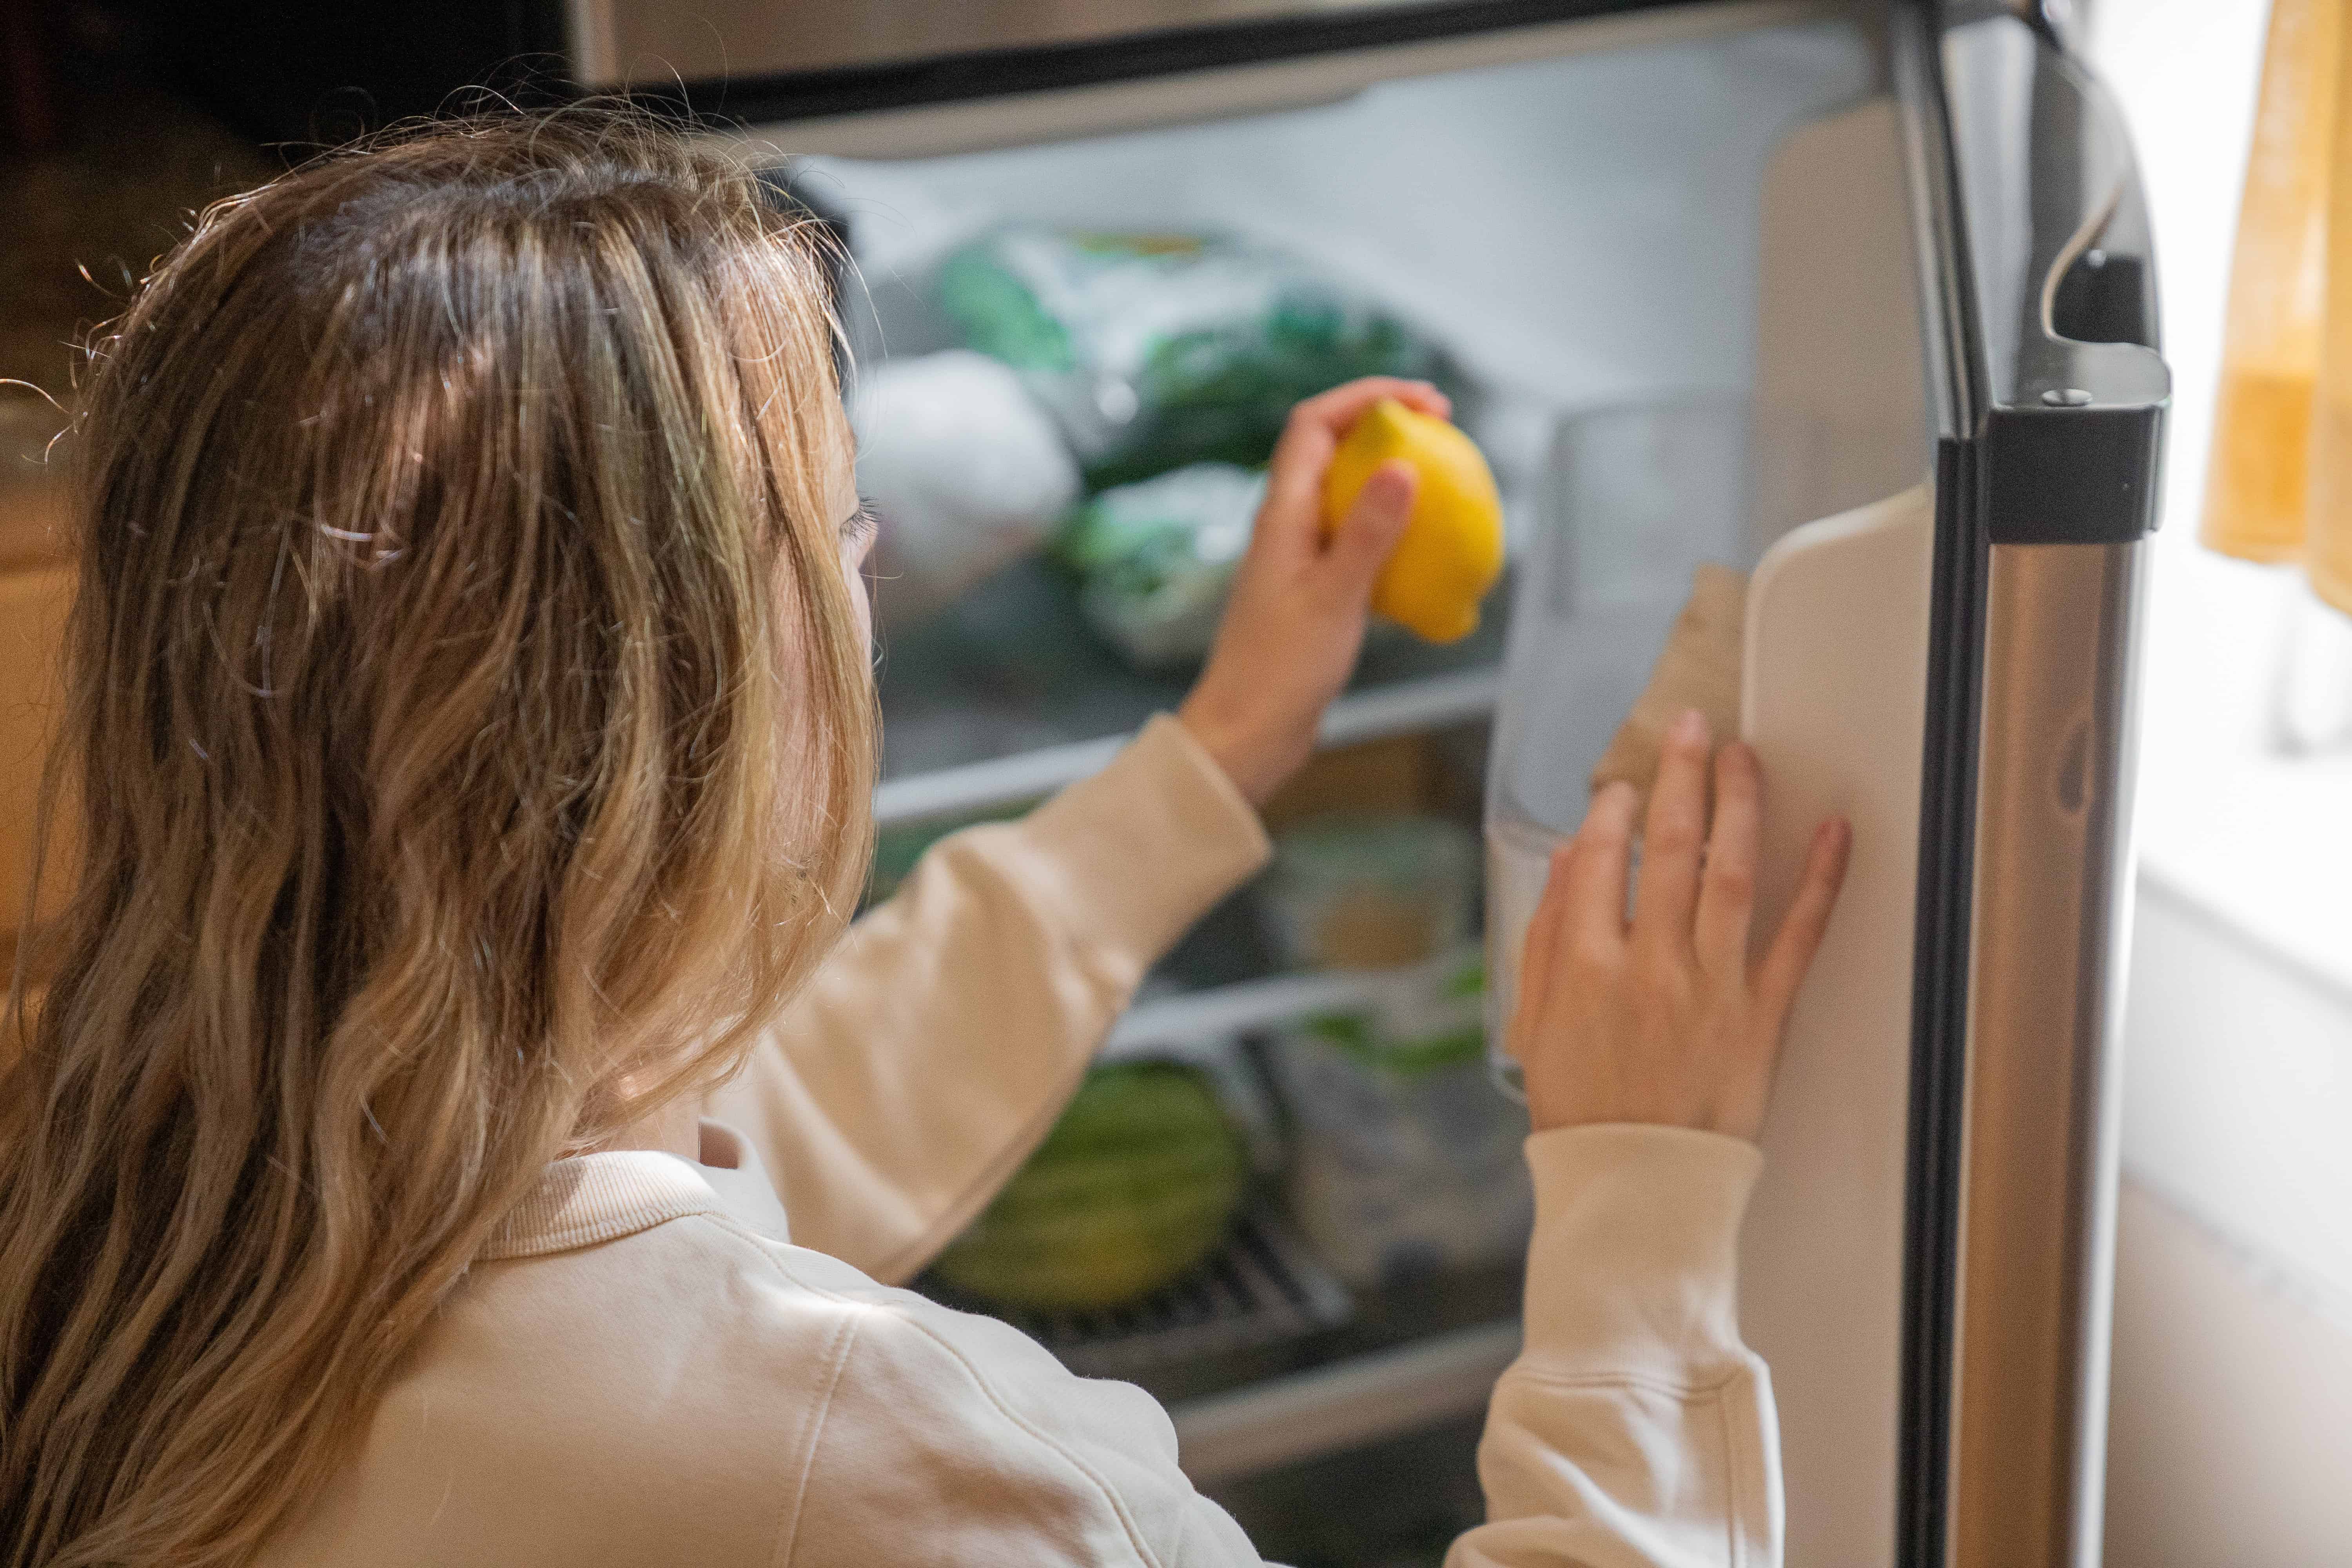 Woman taking lemon from refrigerator.